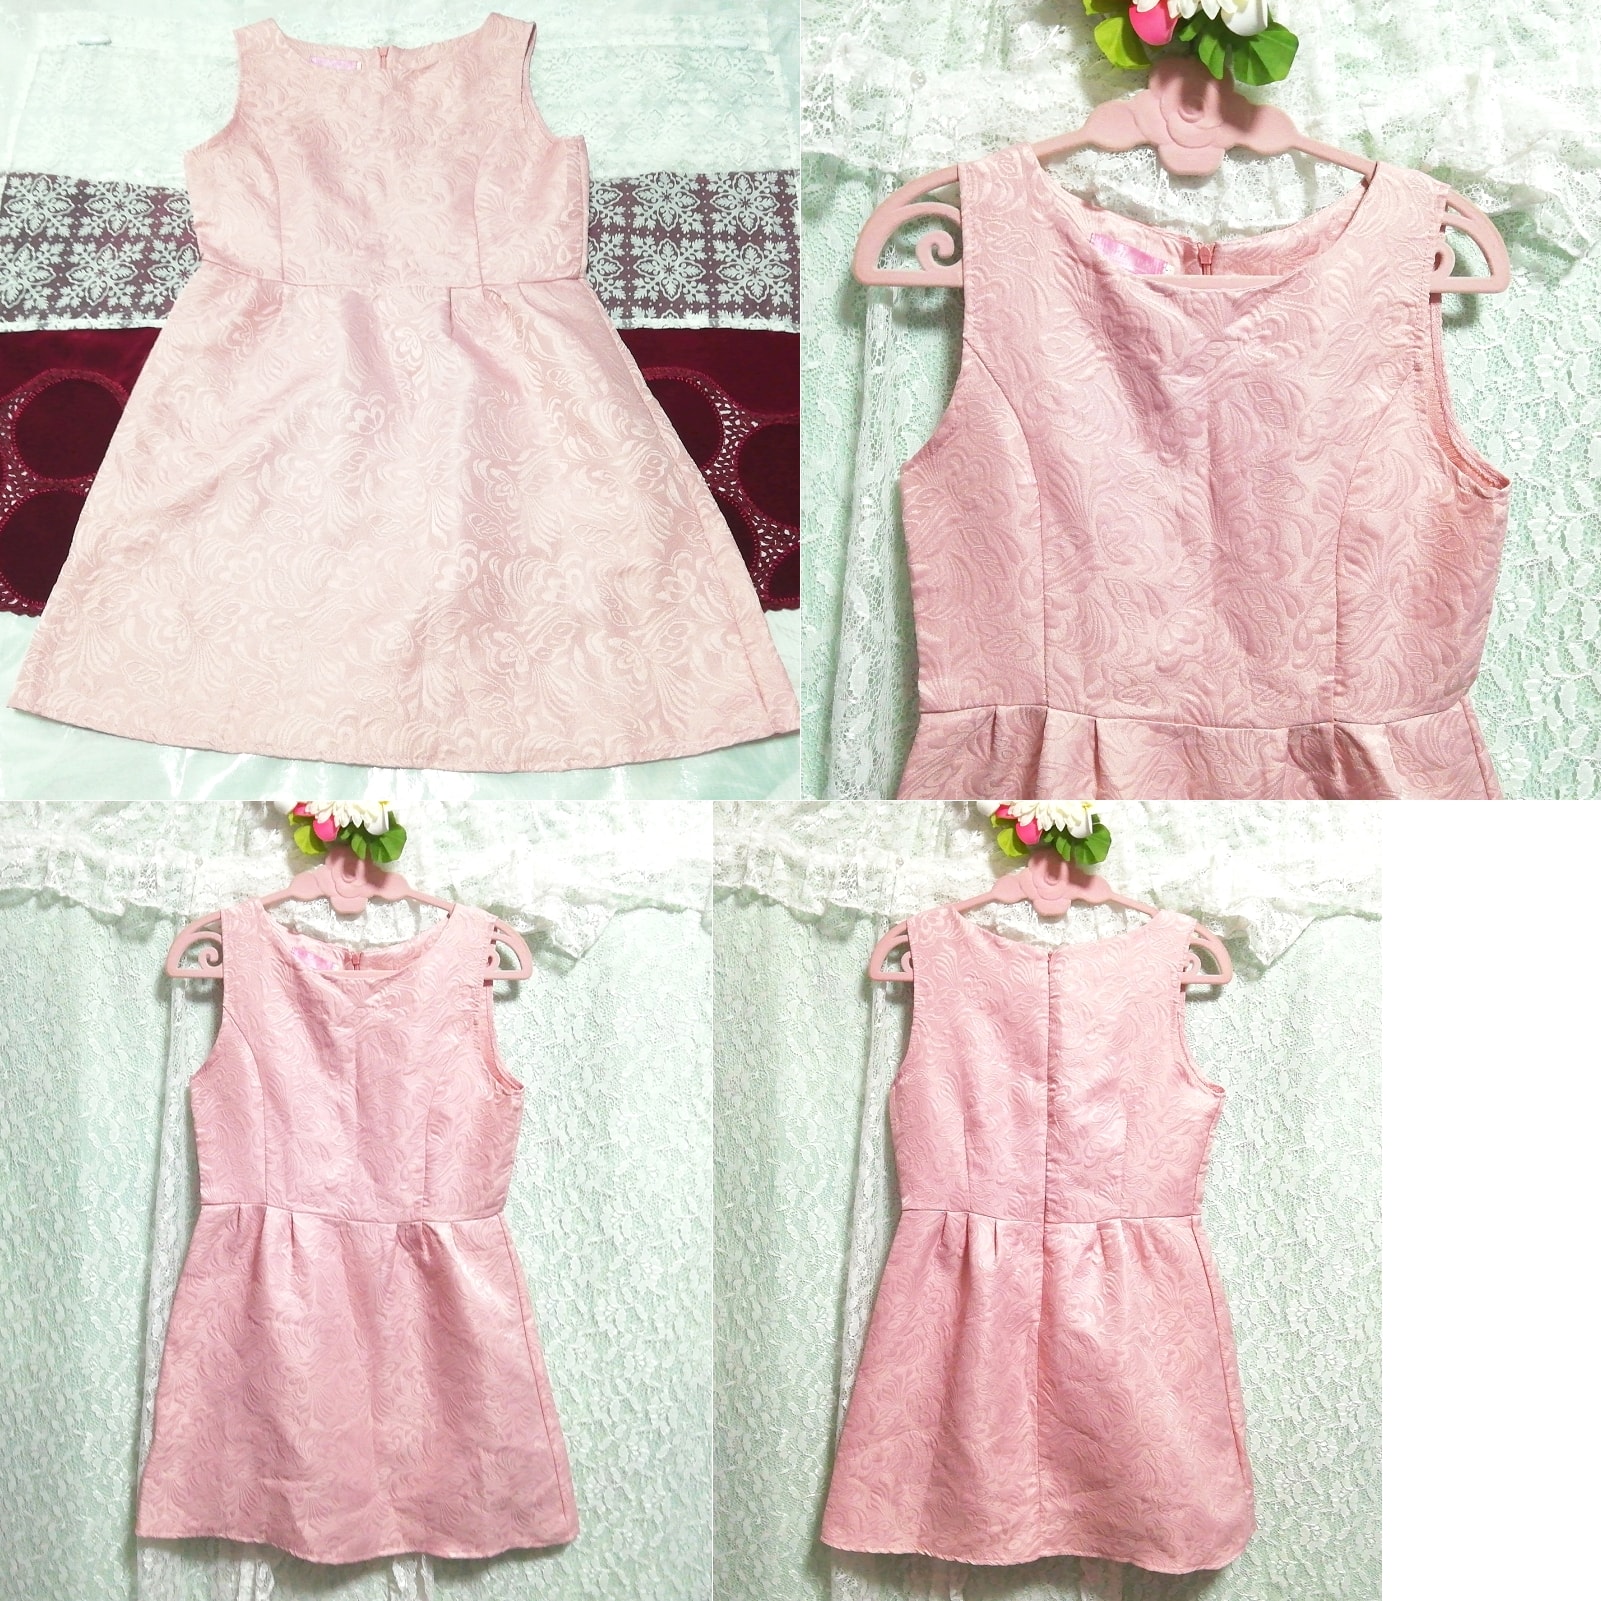 Rosa ärmelloses Minirock-Negligé-Nachthemdkleid, Tunika, ärmellos, ärmellos, Größe m